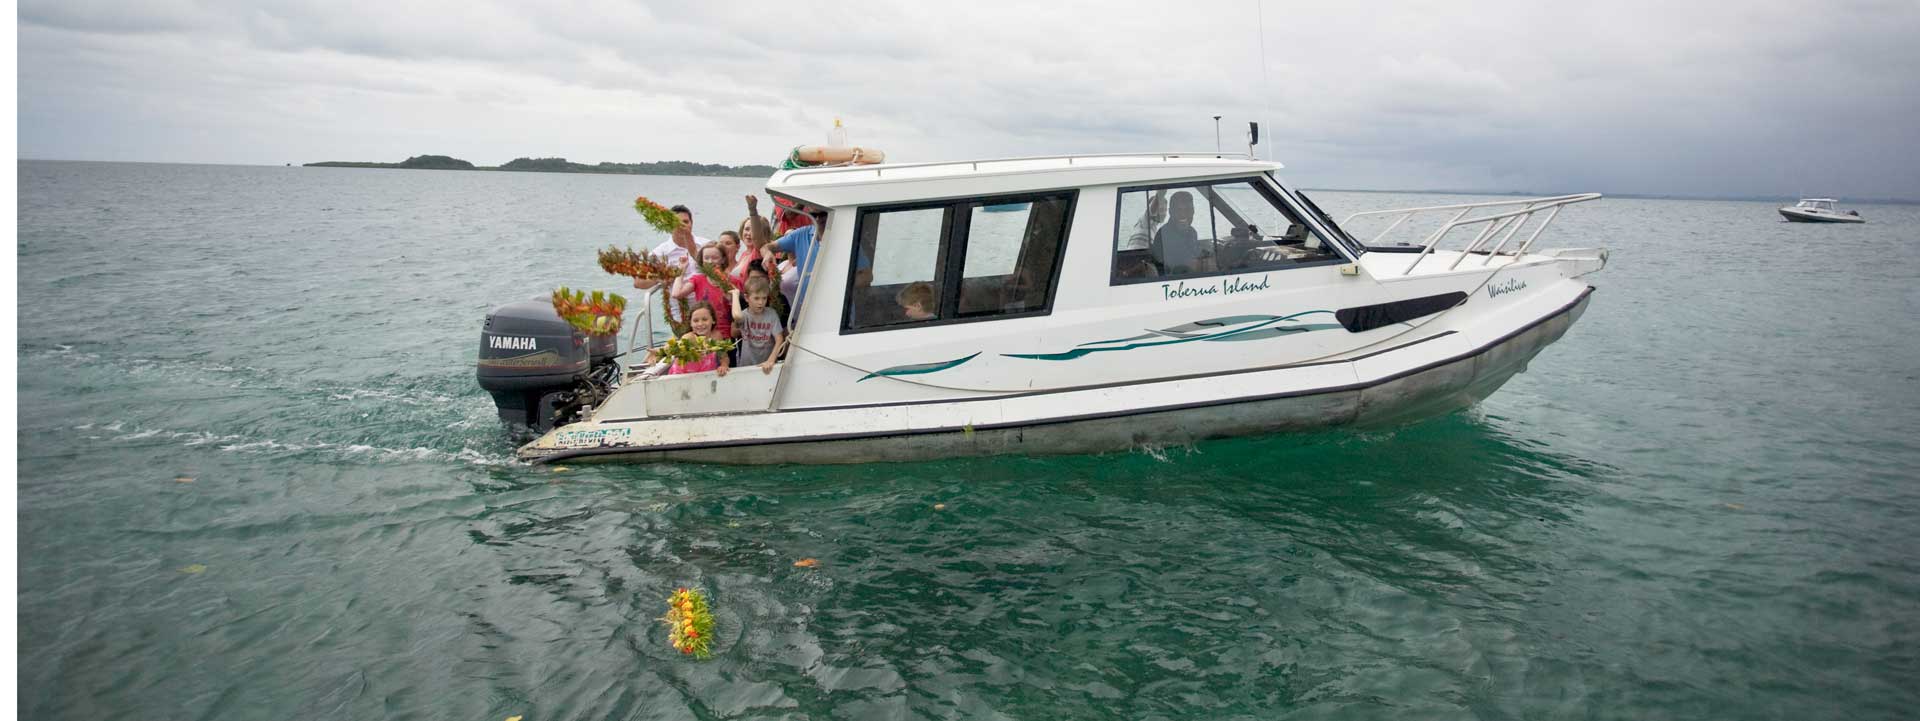 Fiji Trips and Tours Toberua Island